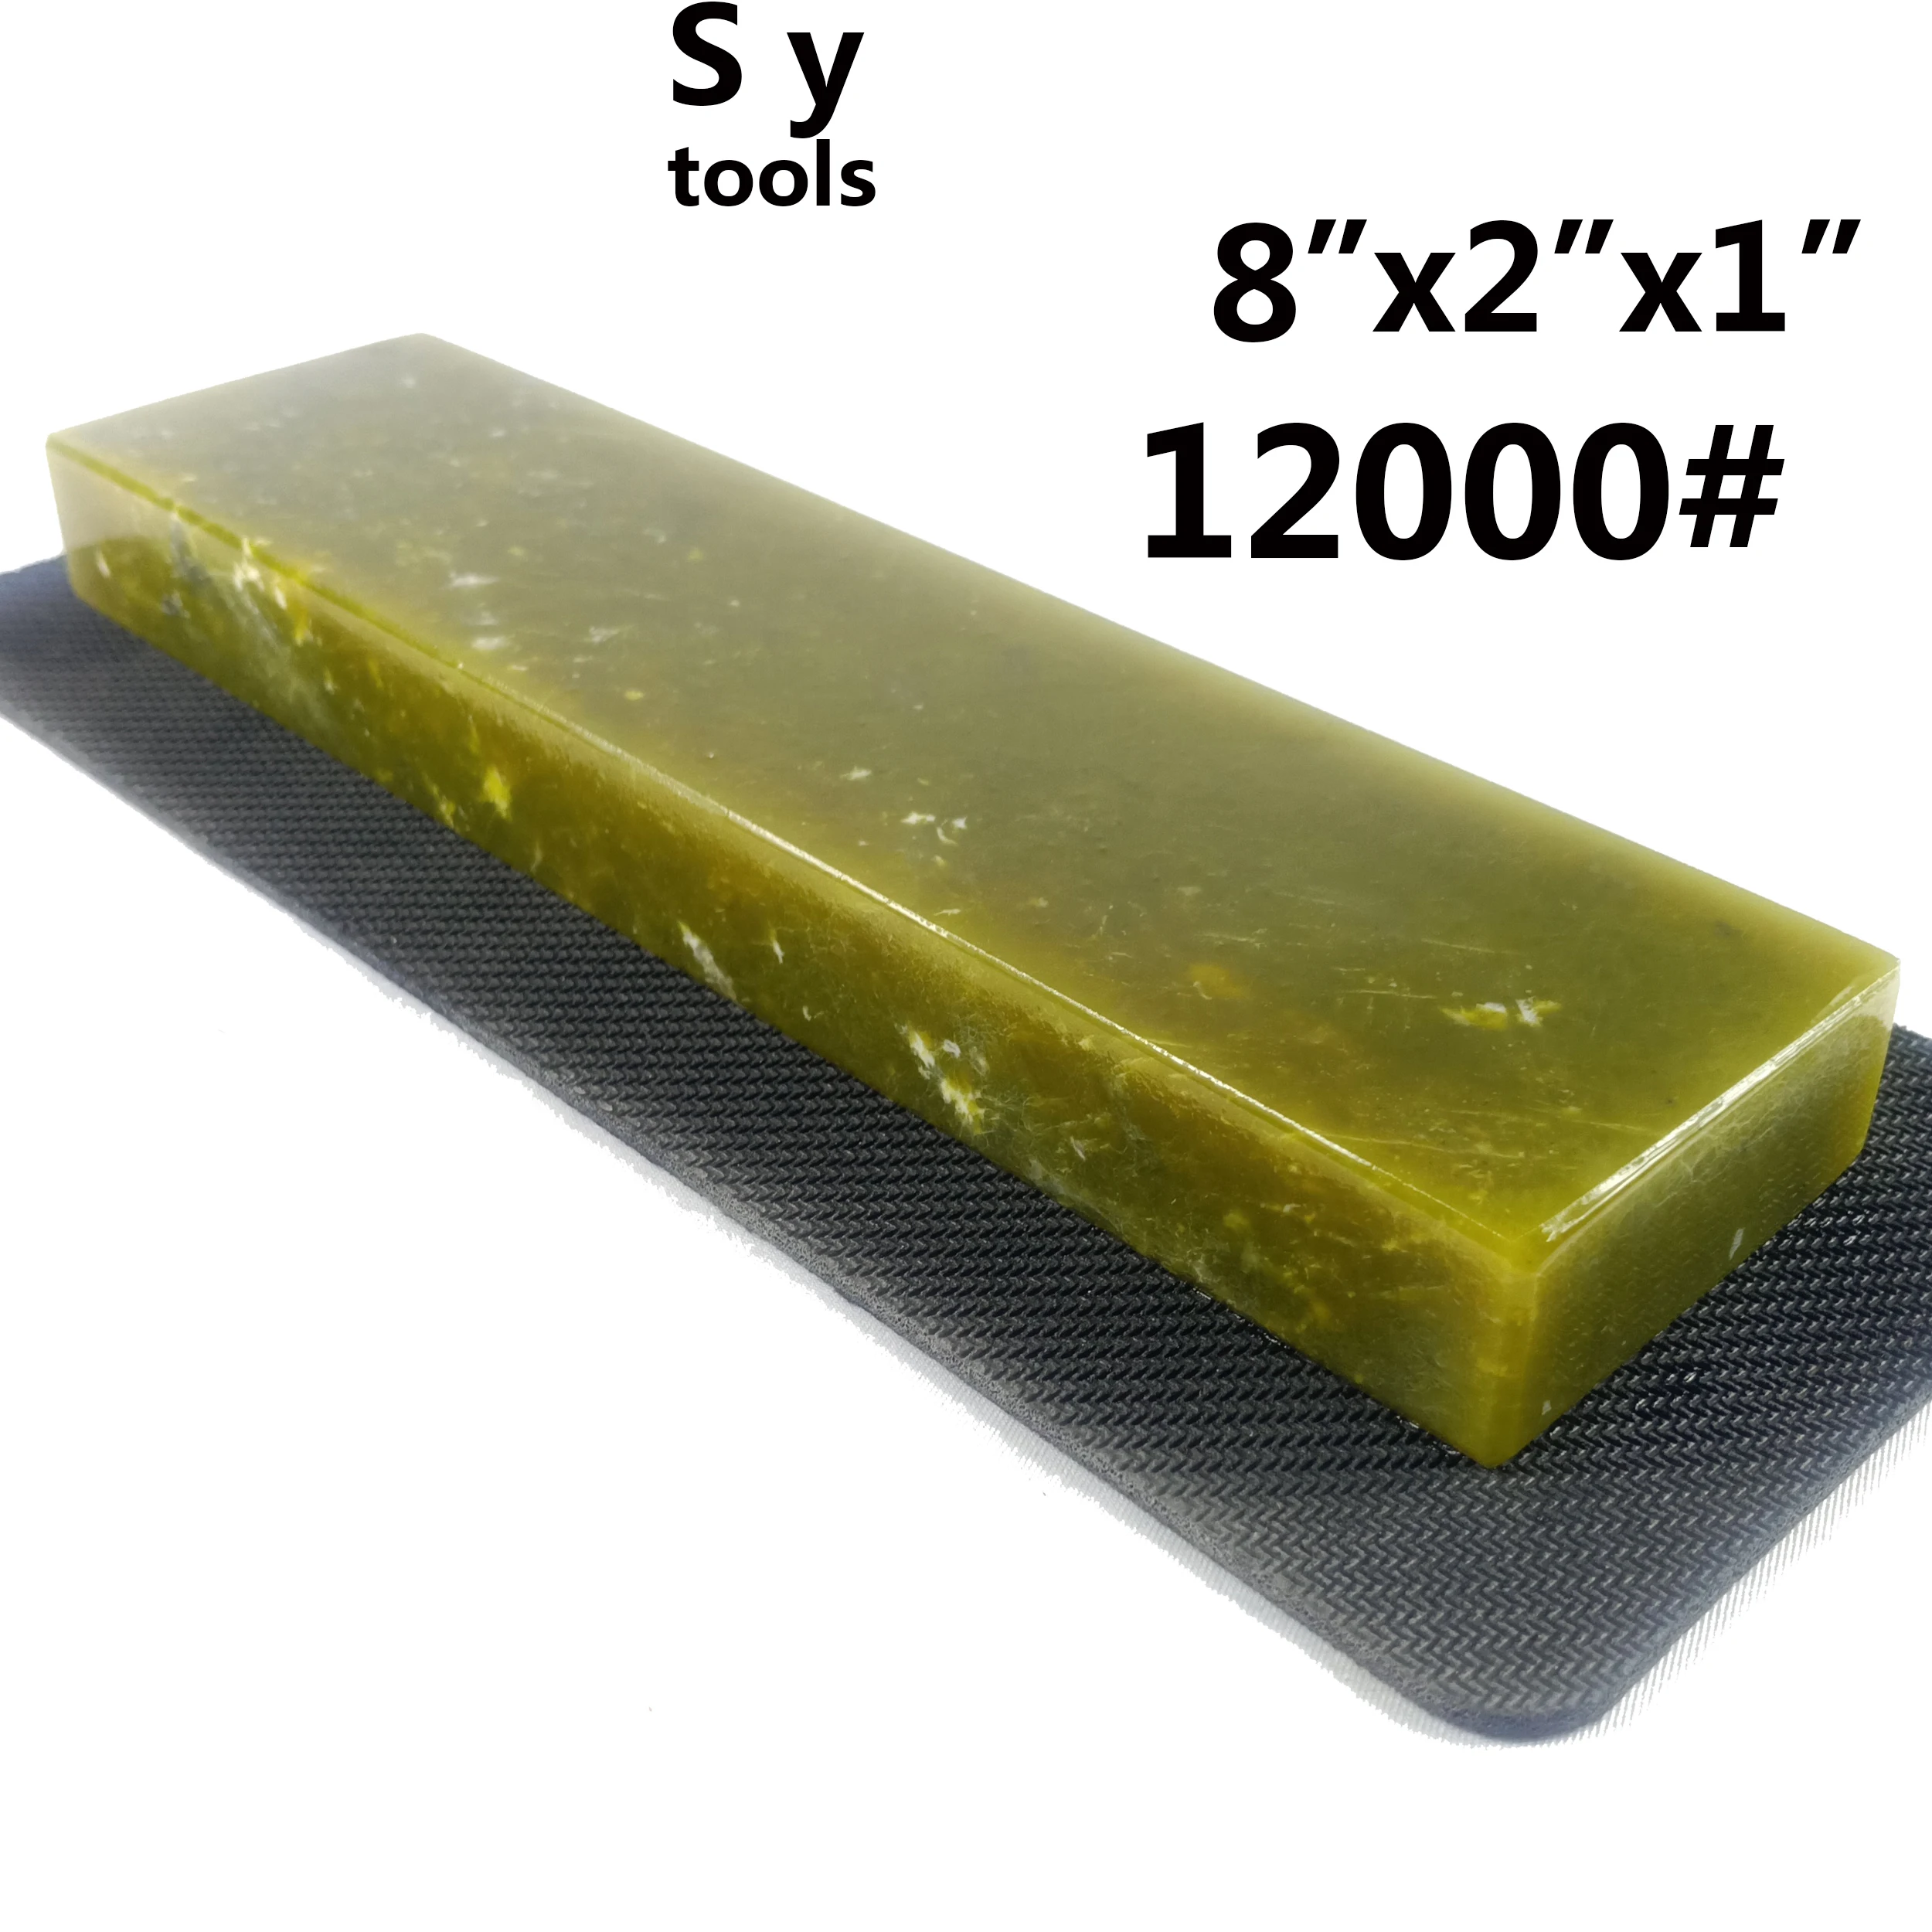 https://ae01.alicdn.com/kf/S96a71eb50f694304afadcaba2d73e77ao/12000-Kitchen-knife-sharpening-stone-8-x2-x1-inch-natural-Yellow-agate-super-fine-whetstone-Oilstone.jpg